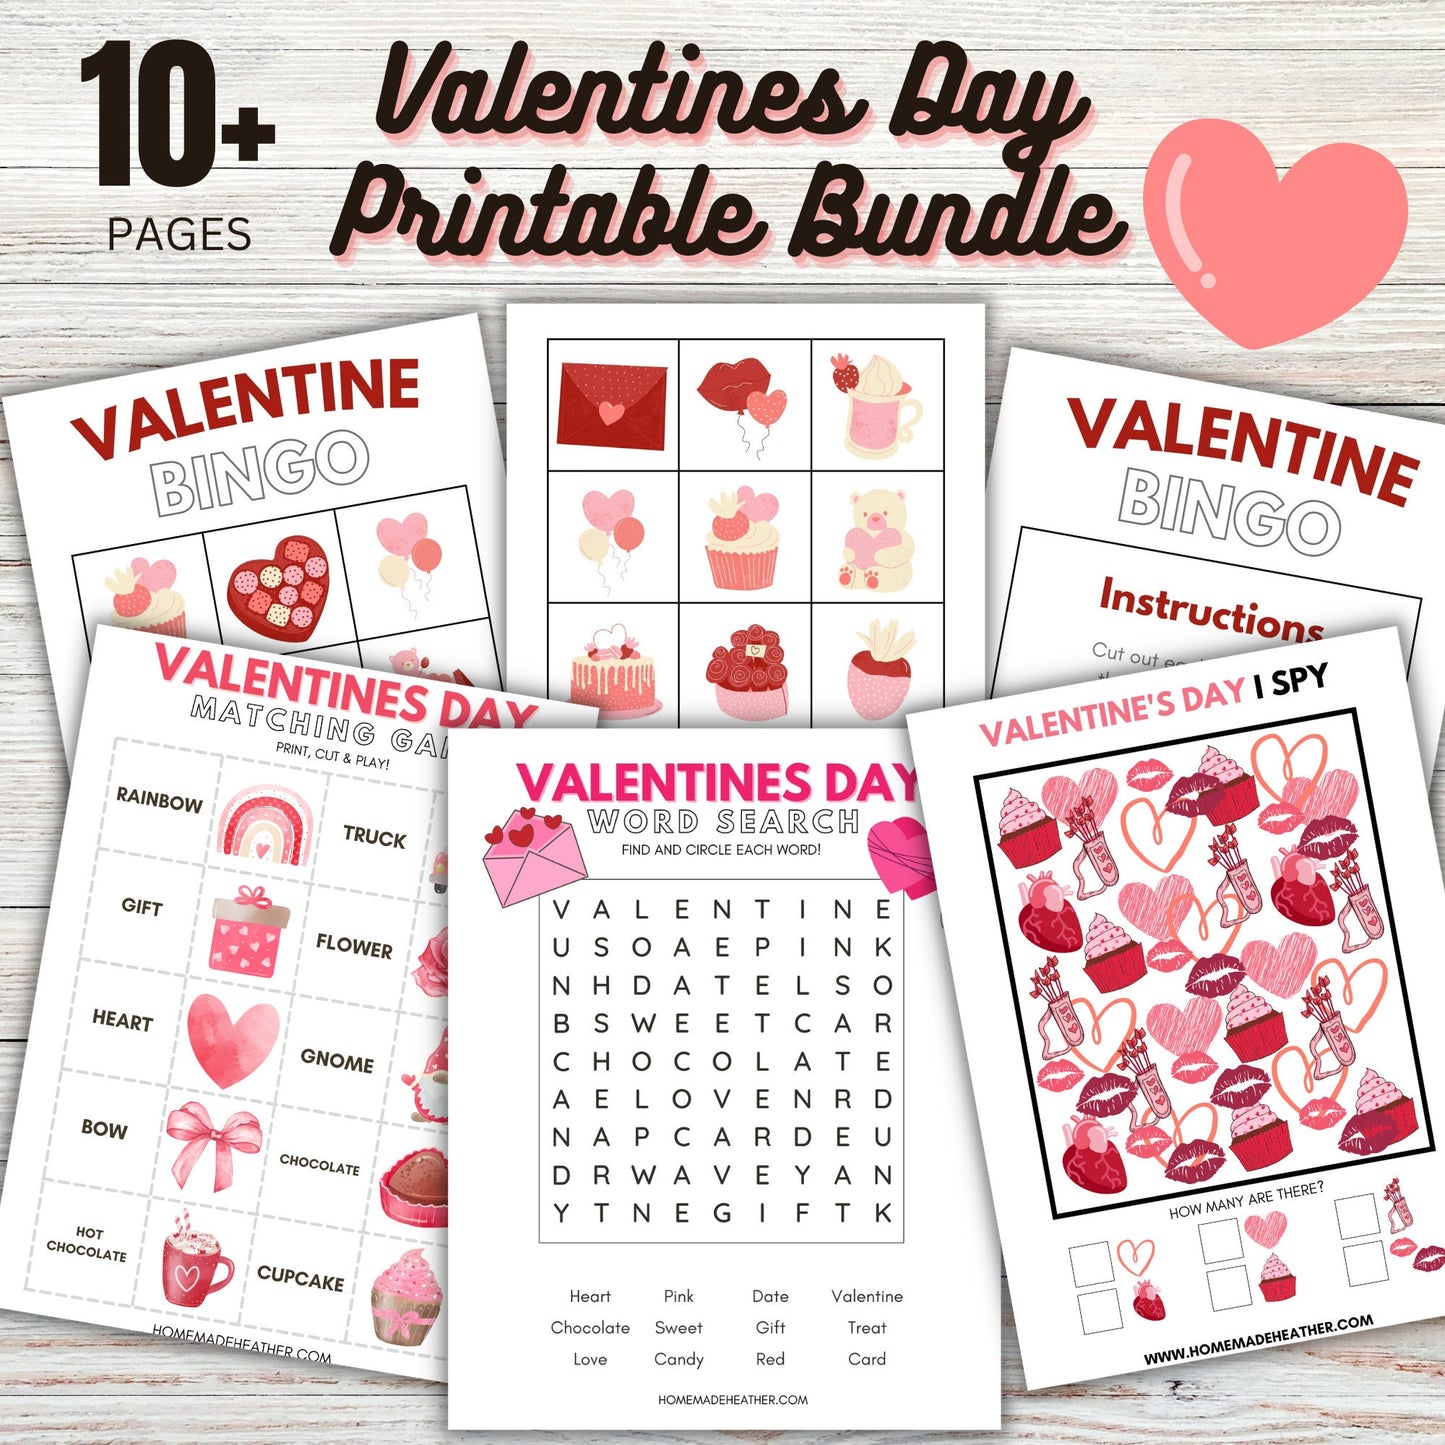 Valentines Day Printable Activity Bundle - Valentines Day Printable PDF - Instant Download